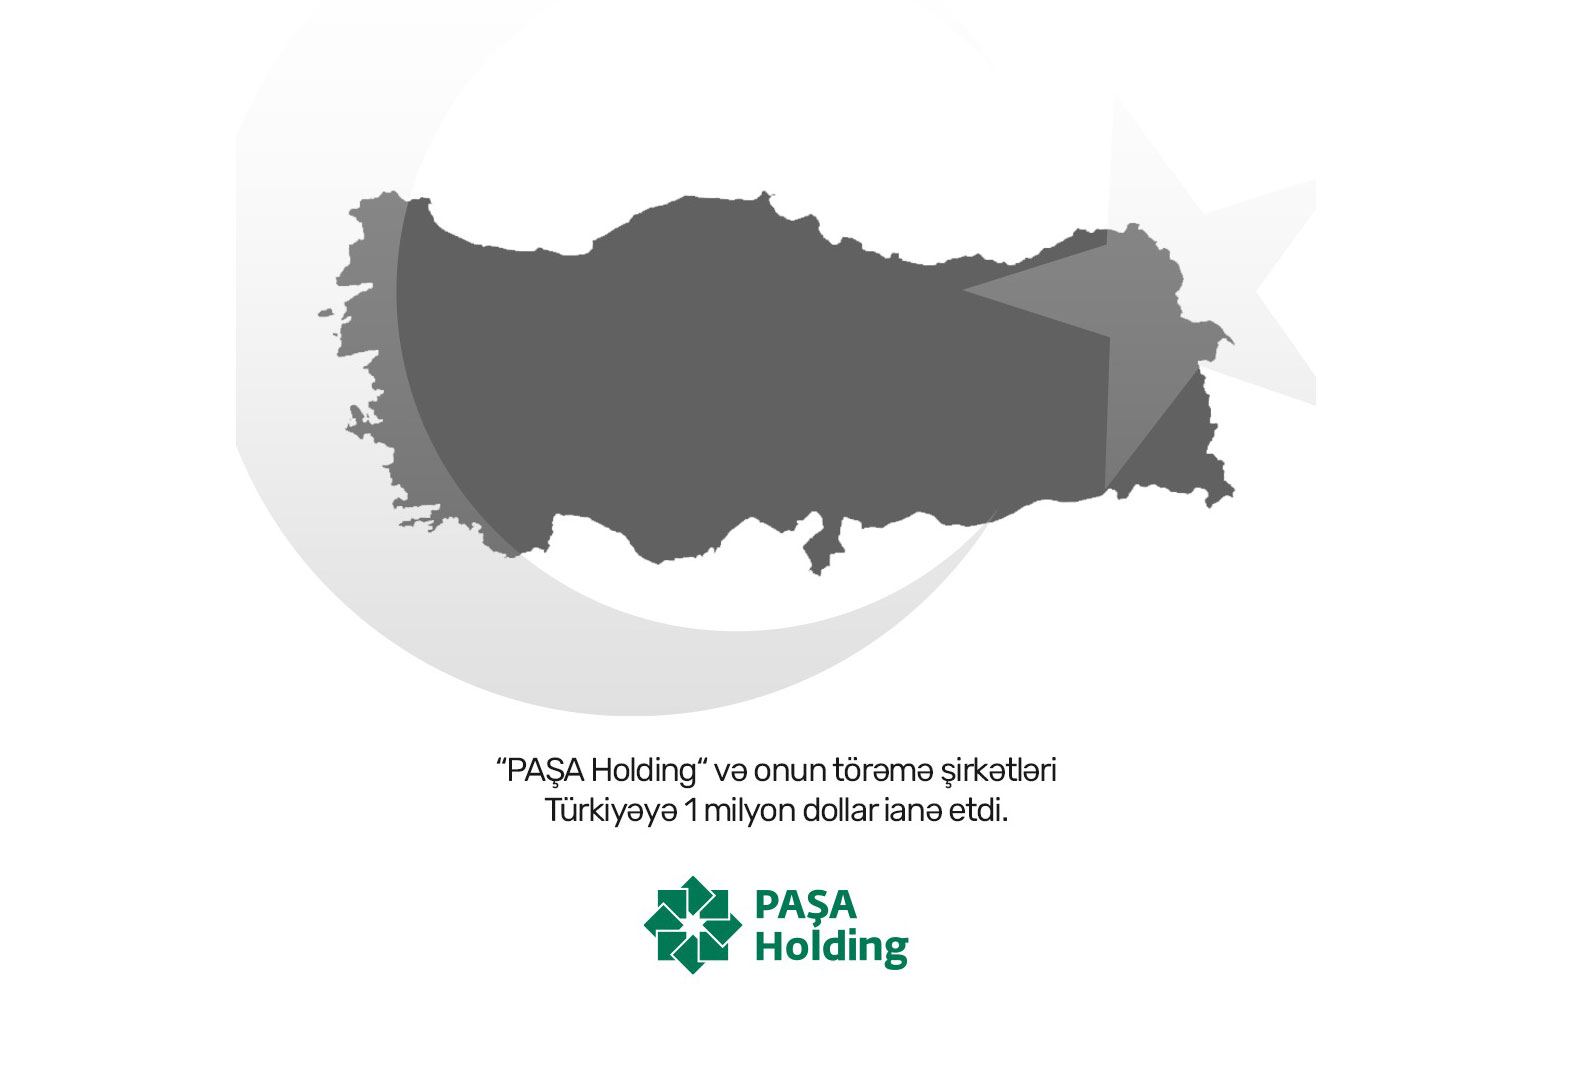 PASHA Holding and its subsidiaries donated 1 million dollars to support Türkiye